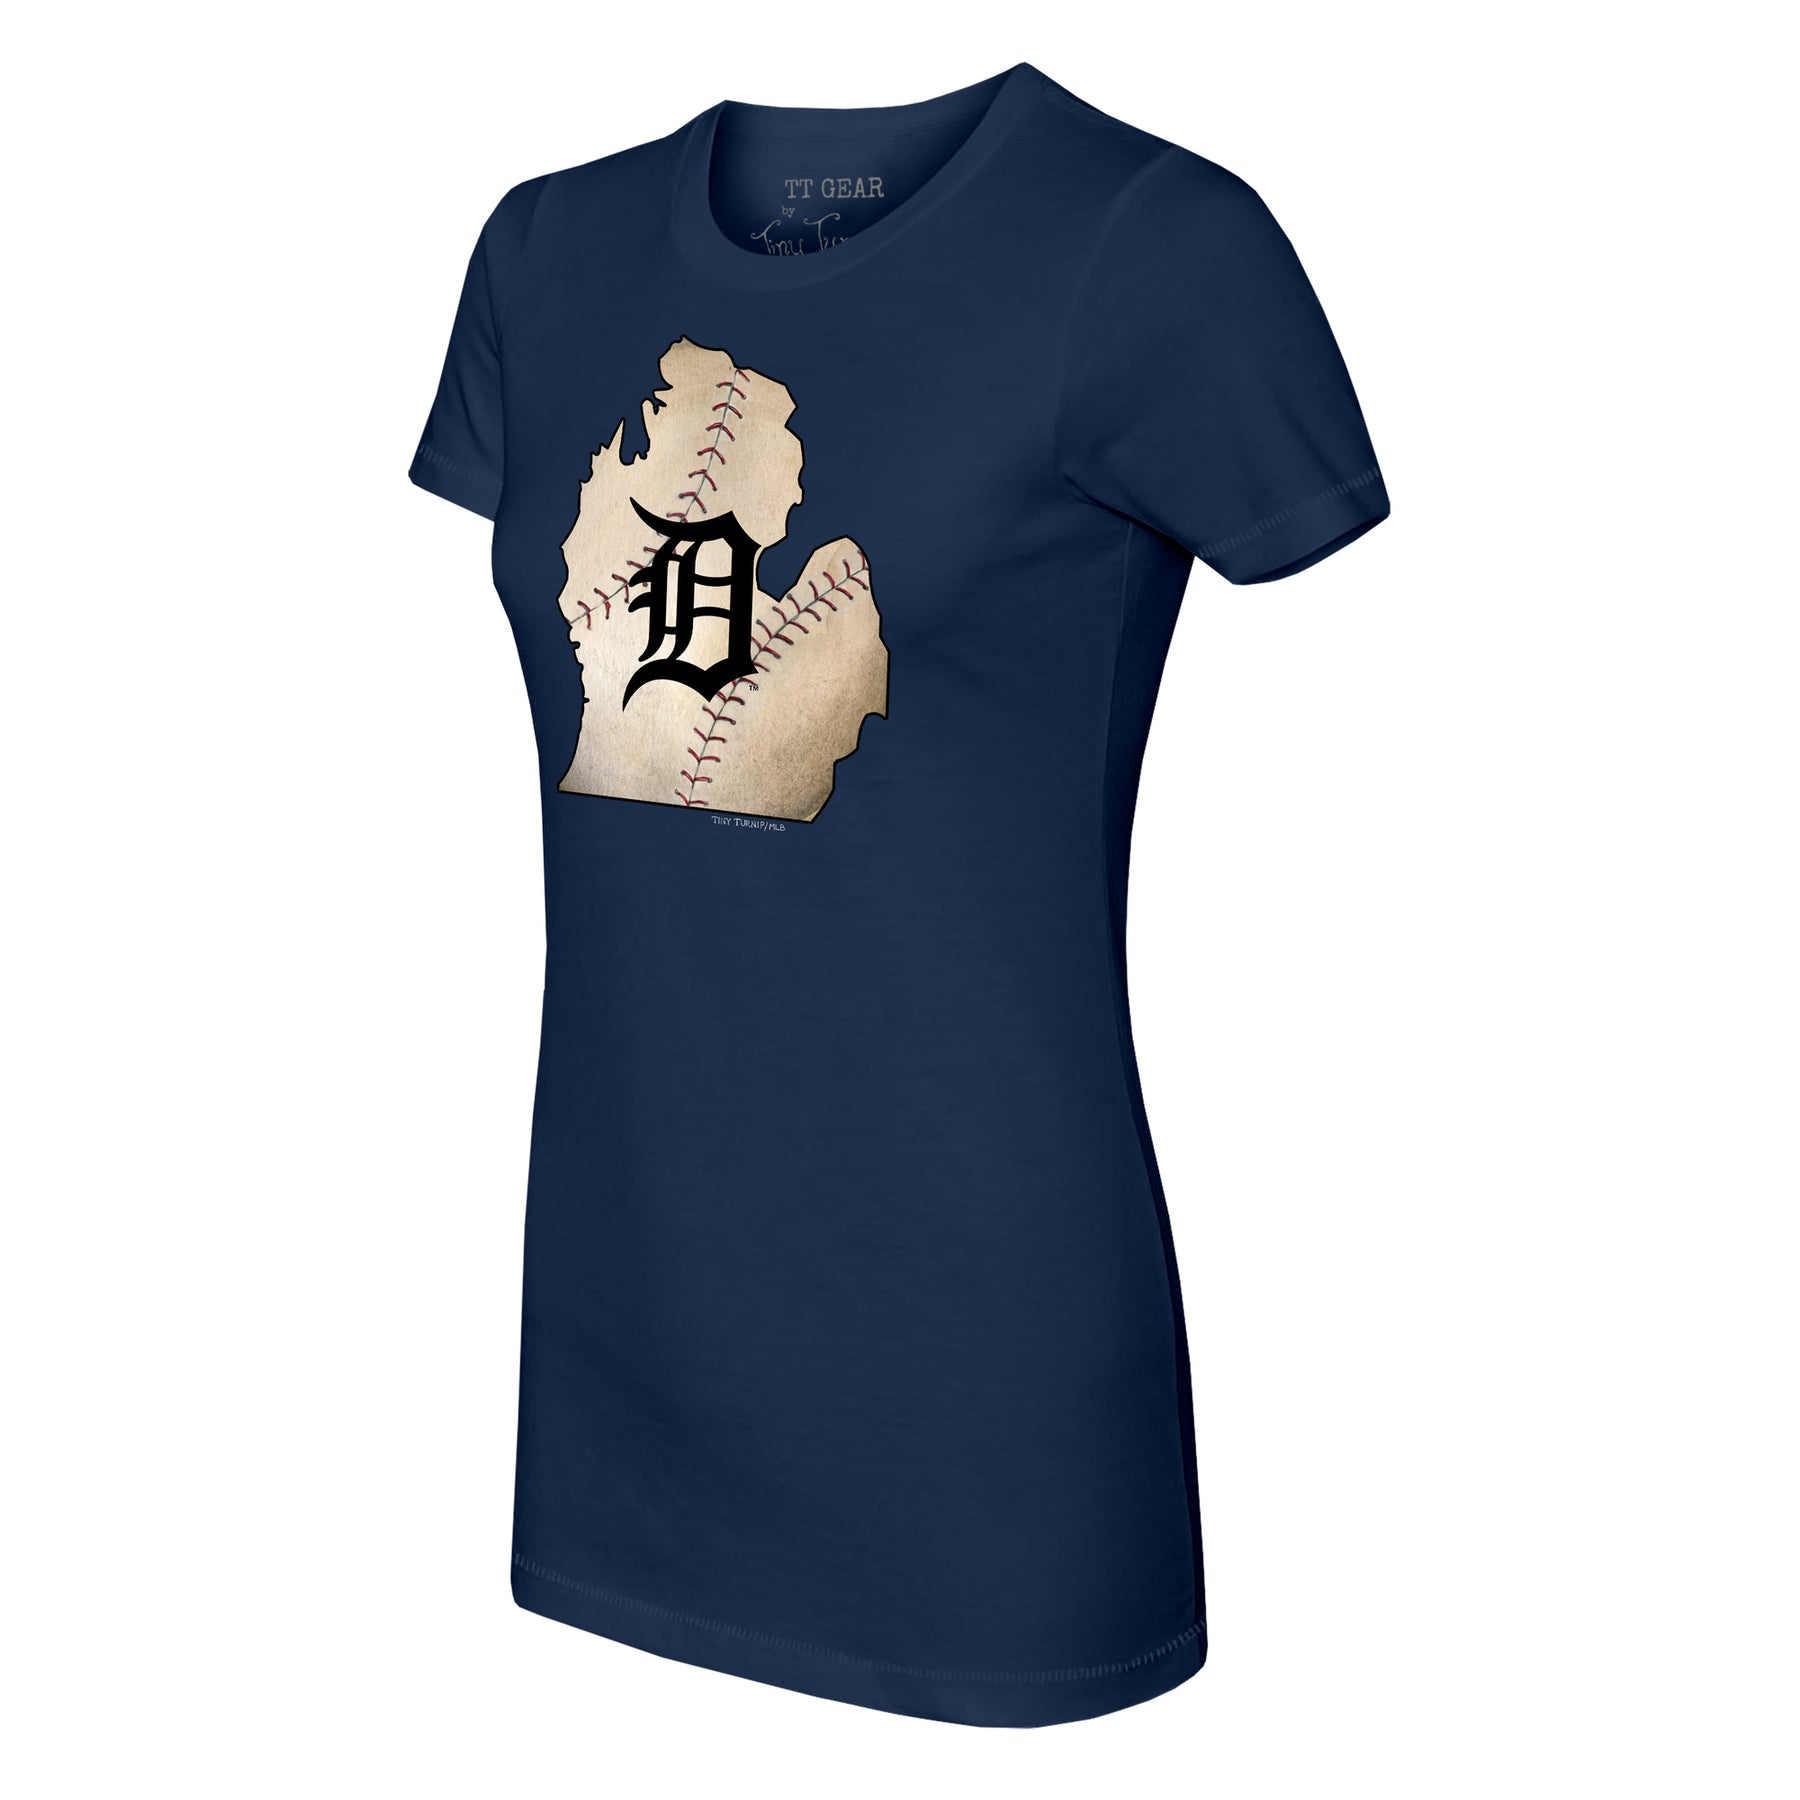 Girls Toddler Tiny Turnip White Detroit Tigers Baseball Bow Fringe T-Shirt Size: 4T